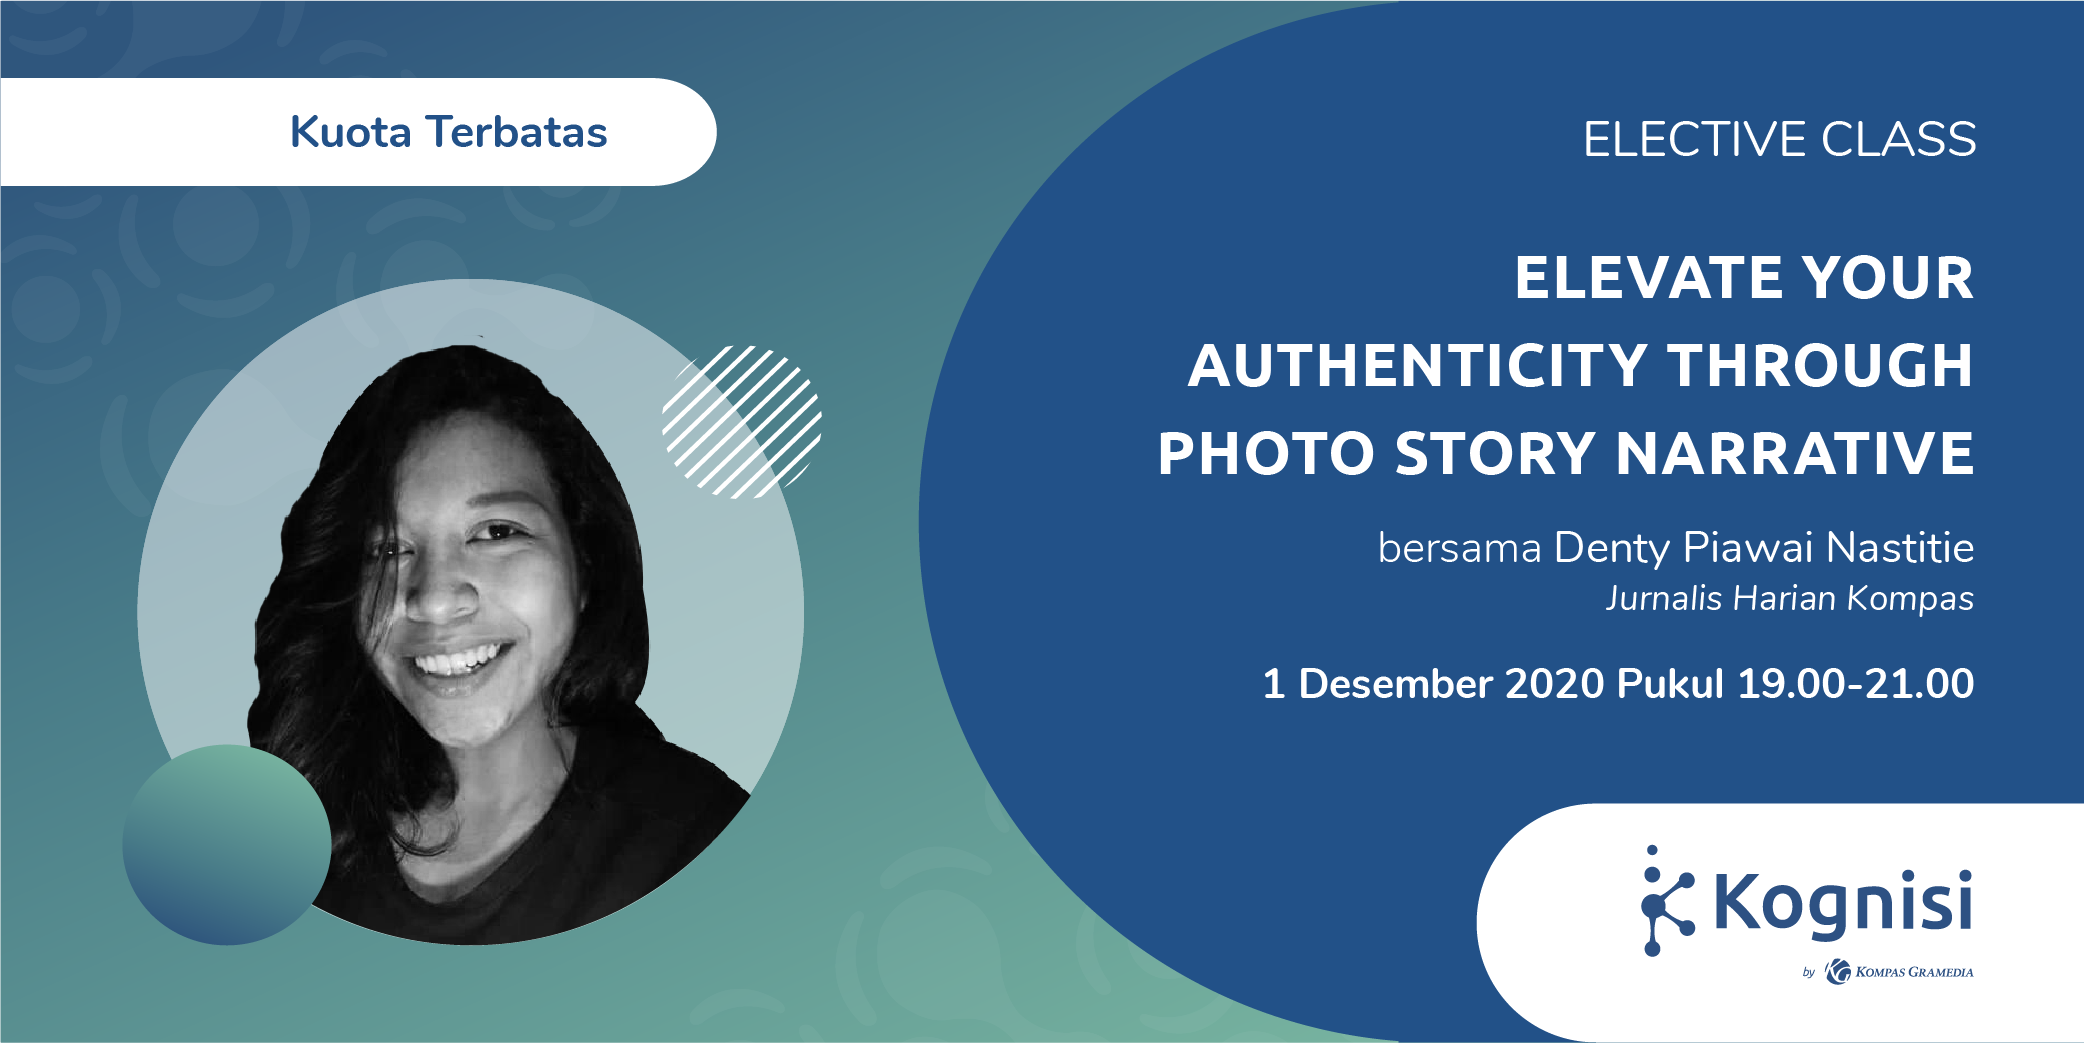 Gambar event Elevate Your Authenticity through Photo Story Narrative dari Kognisi Kompas Gramedia